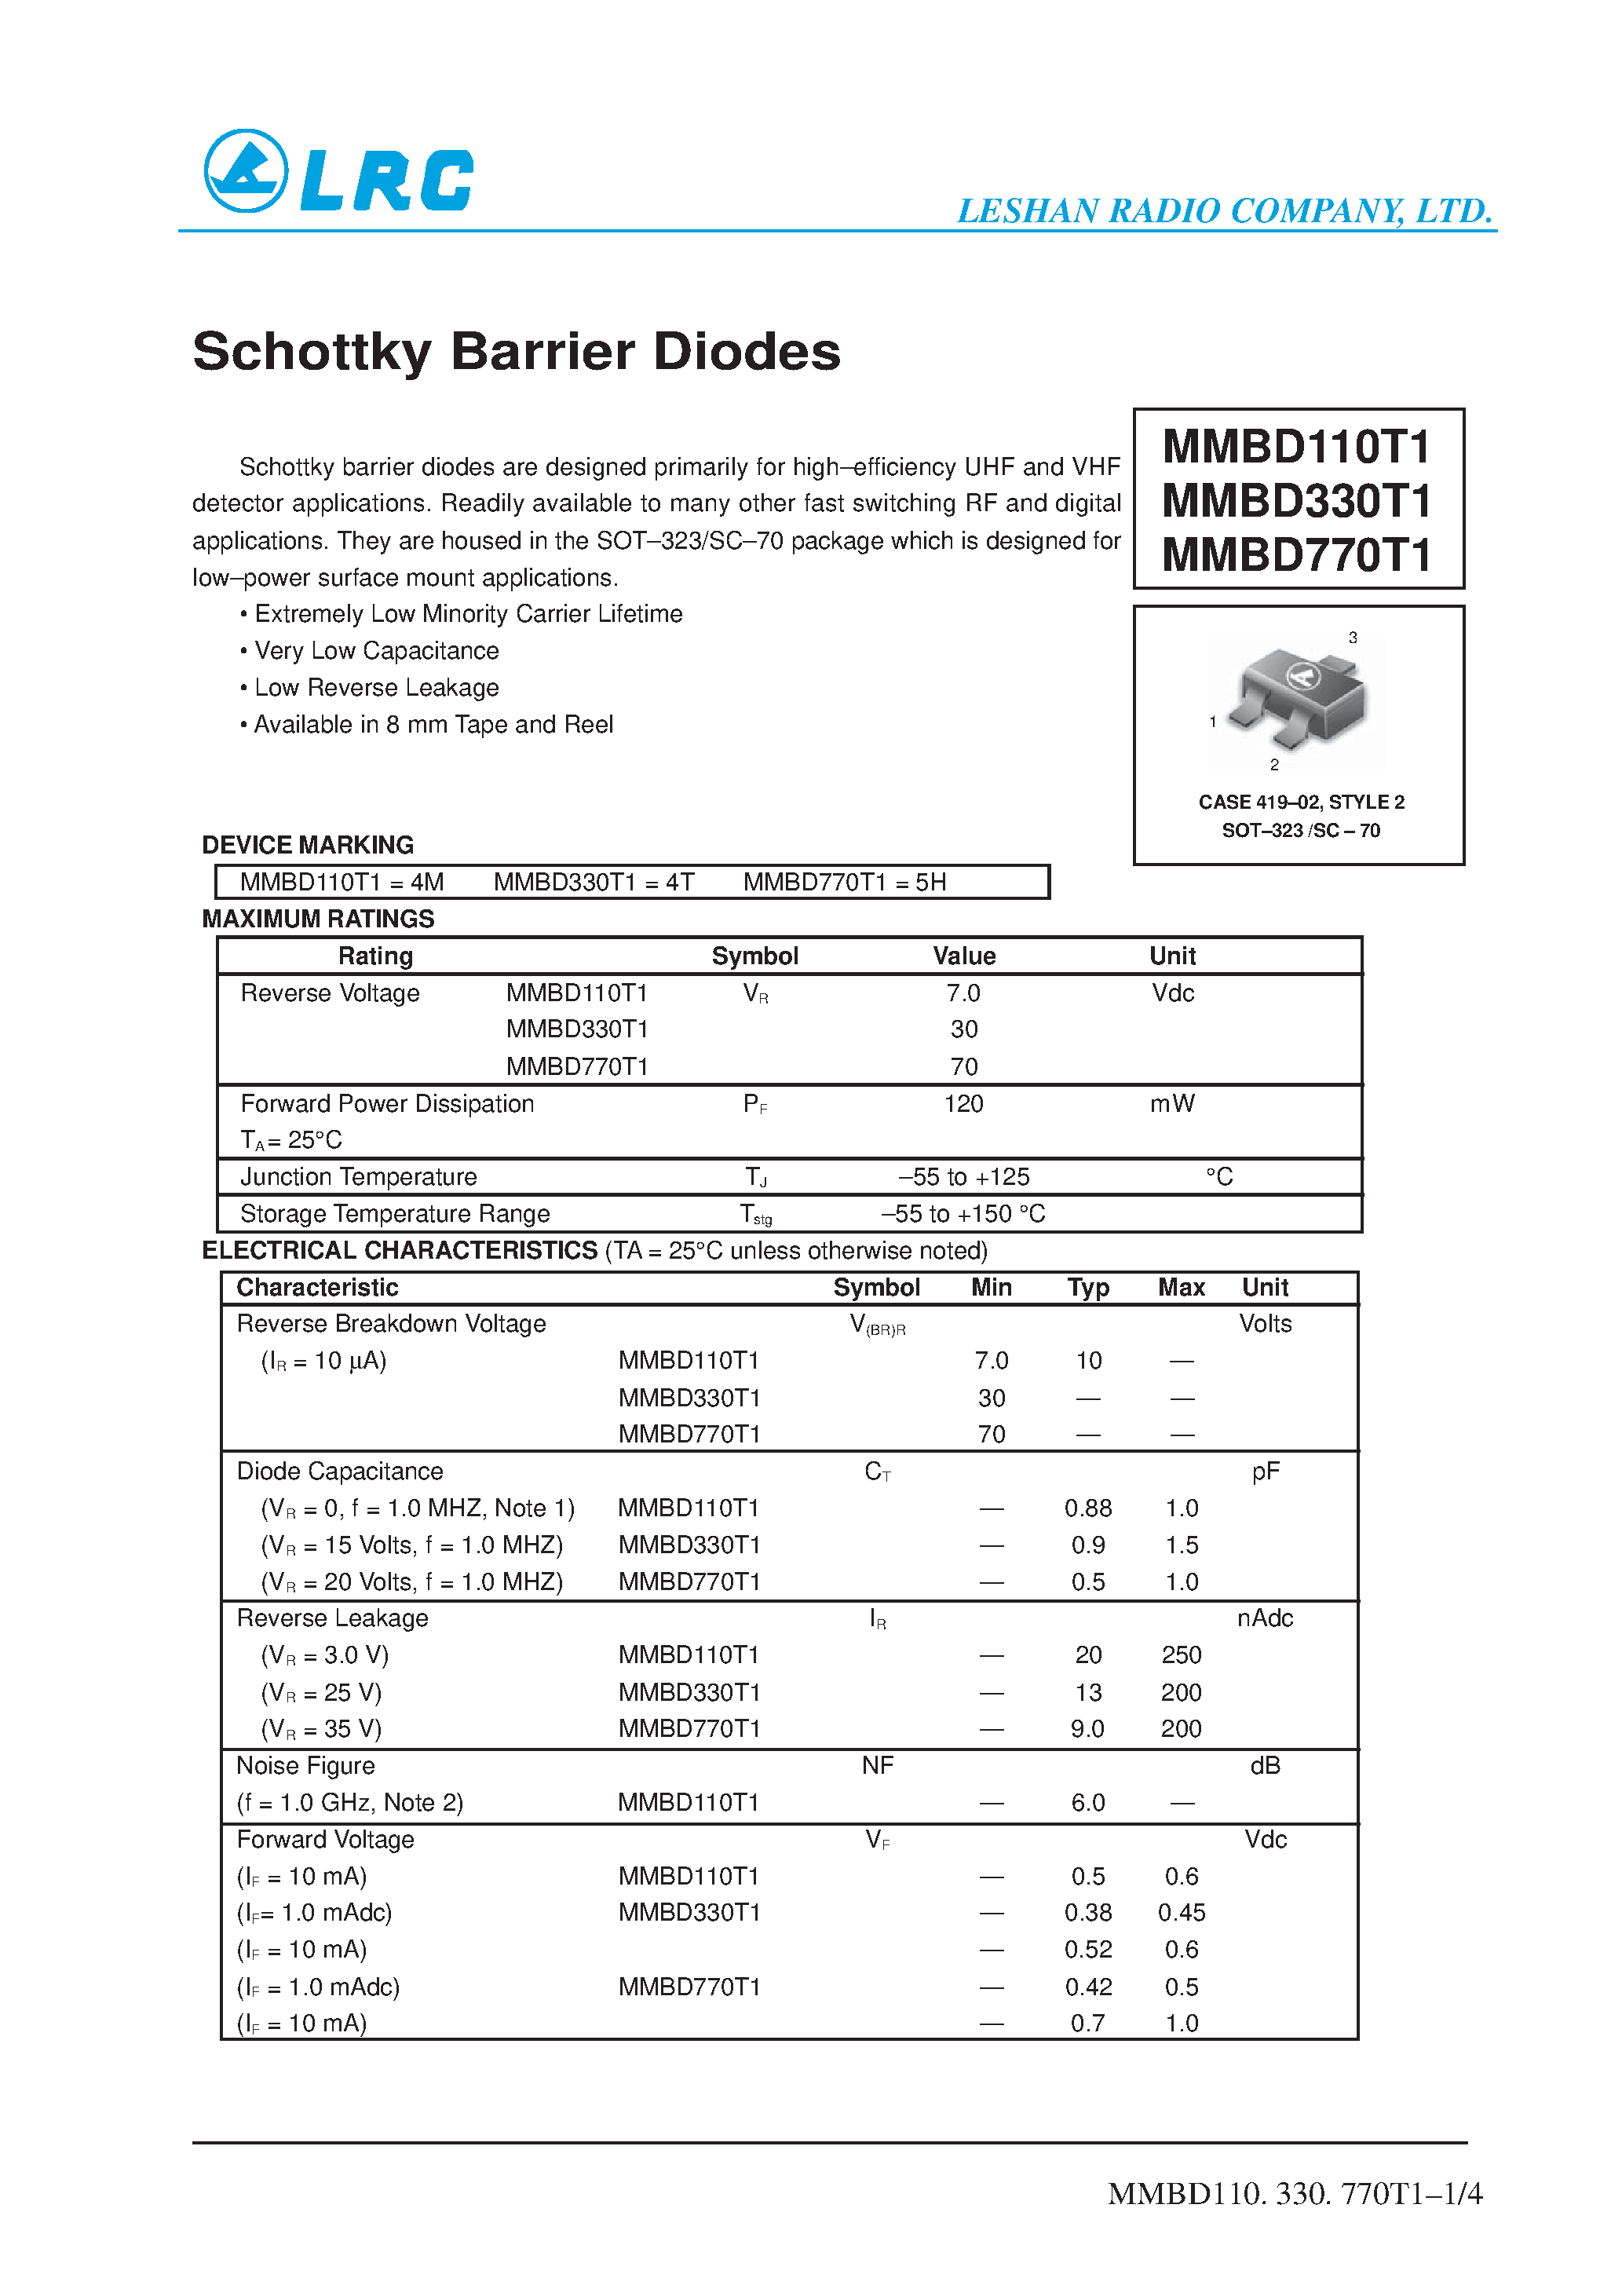 Datasheet MMBD110T1 - Schottky Barrier Diodes page 1